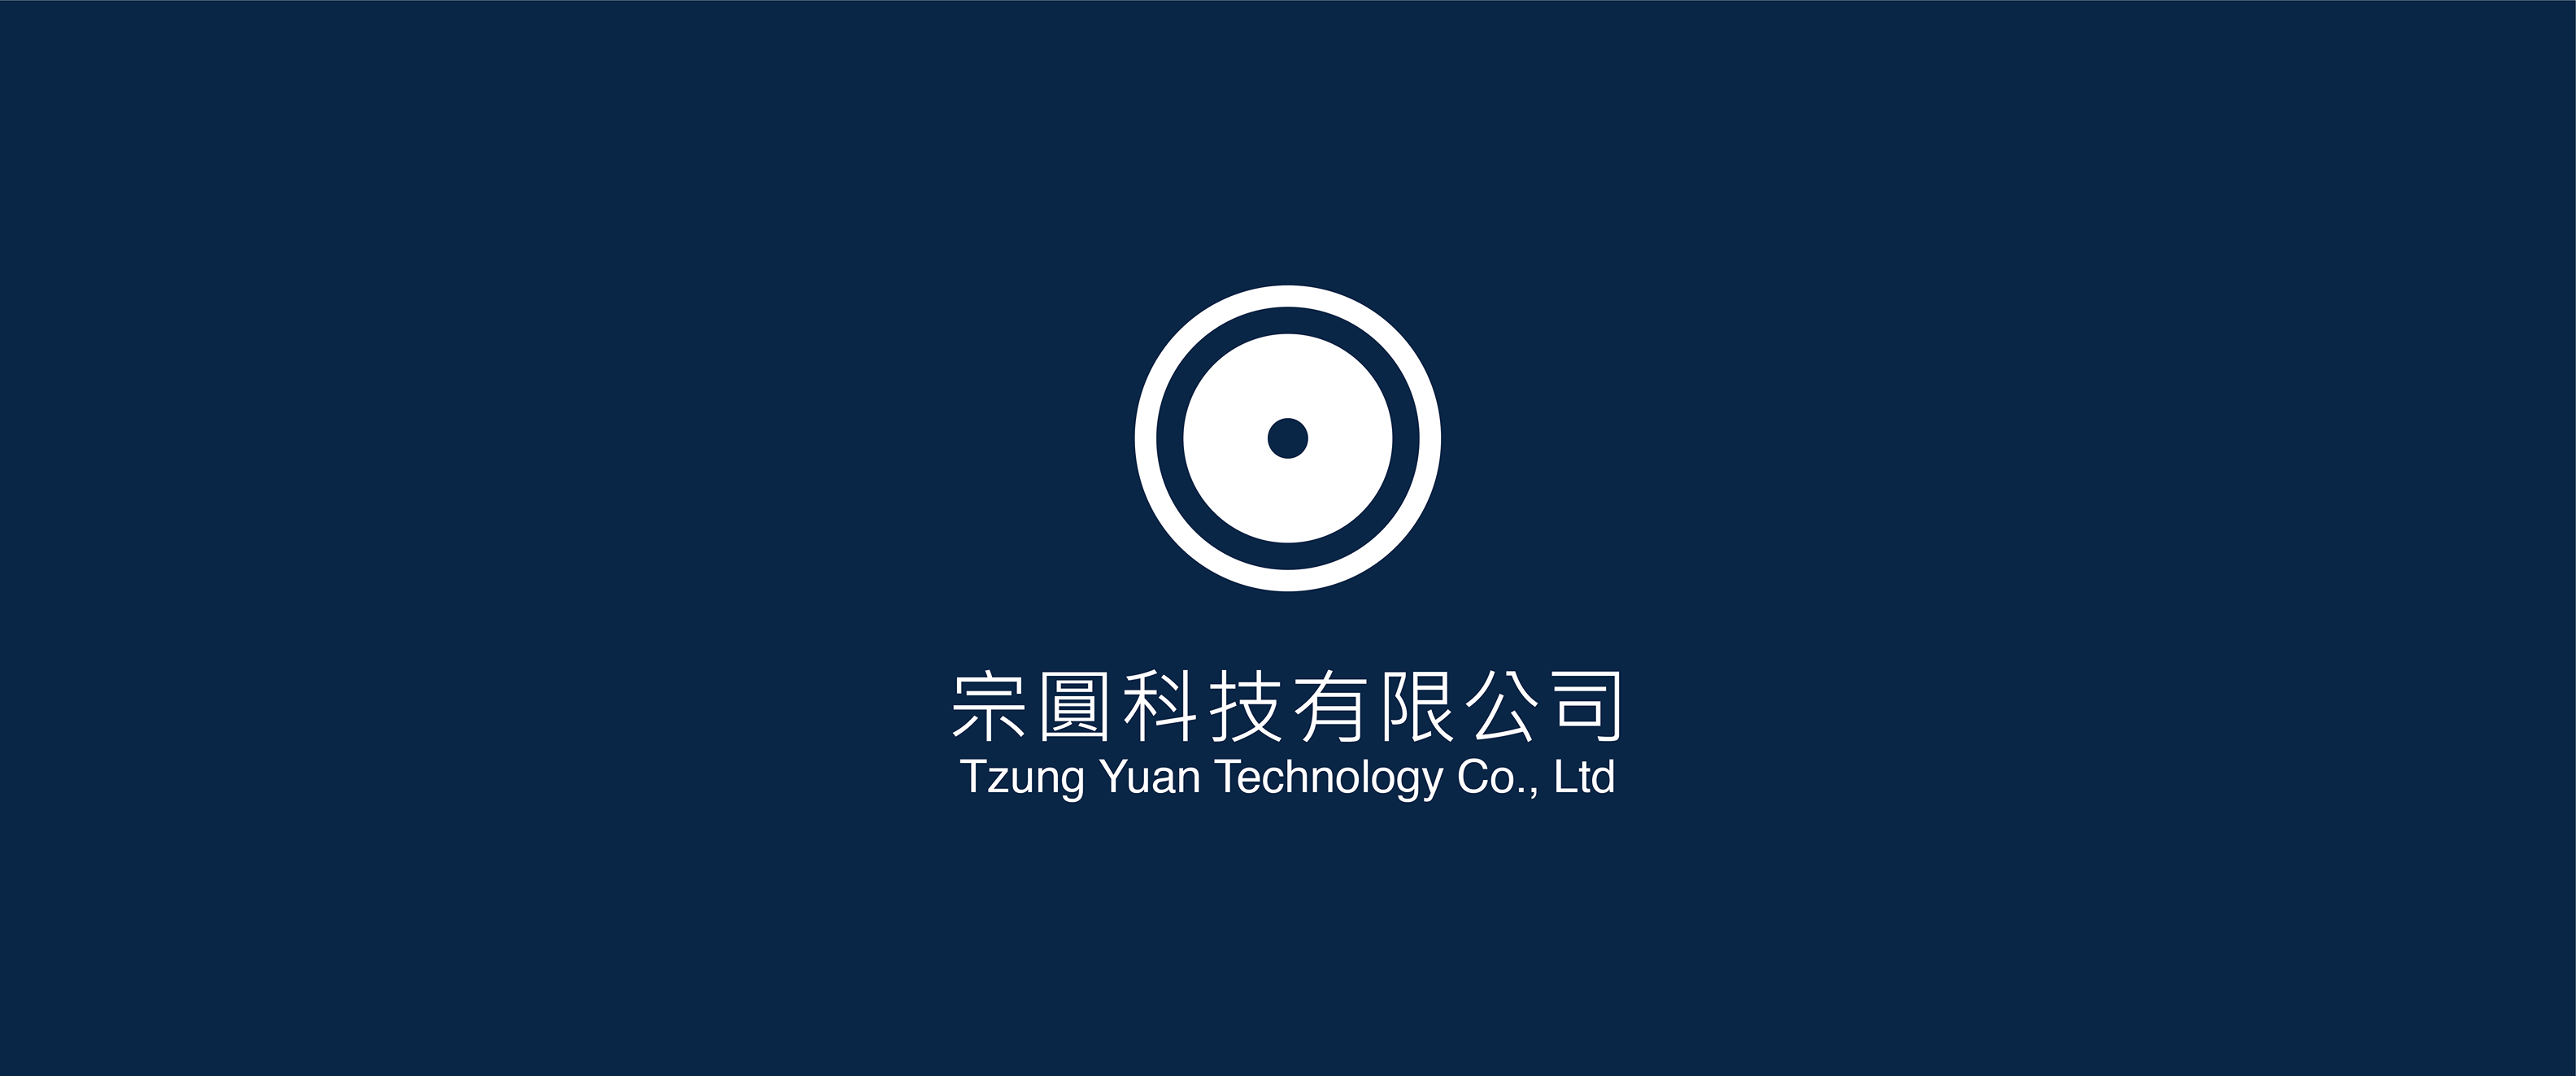 宗圓科技 | Tzung Yuan Technology